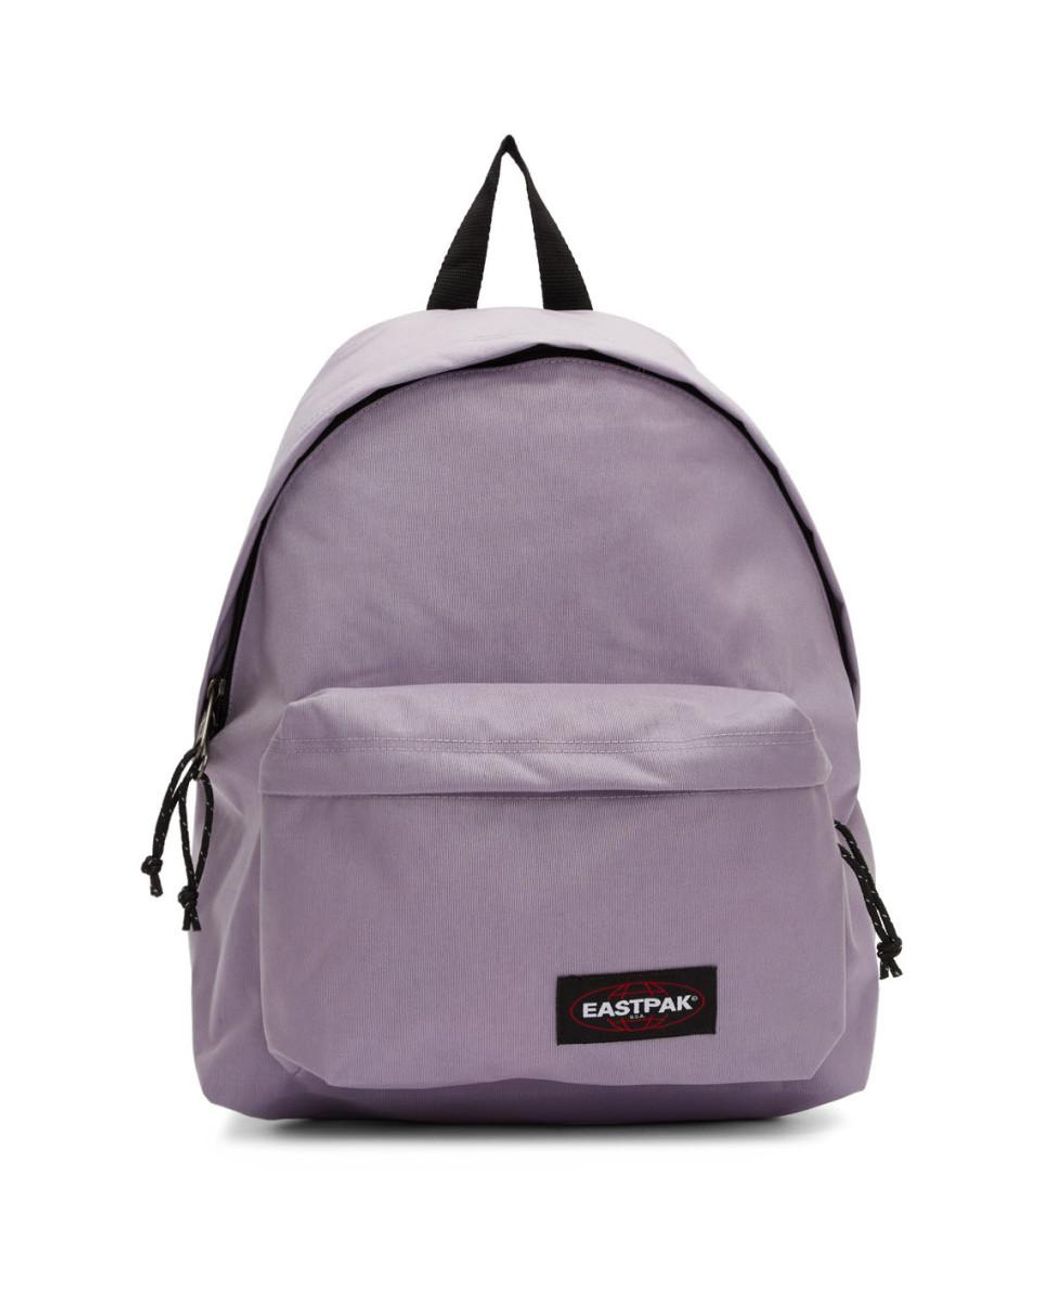 Eastpak Synthetic Purple Padded Pakr Backpack for Men - Save 40% - Lyst